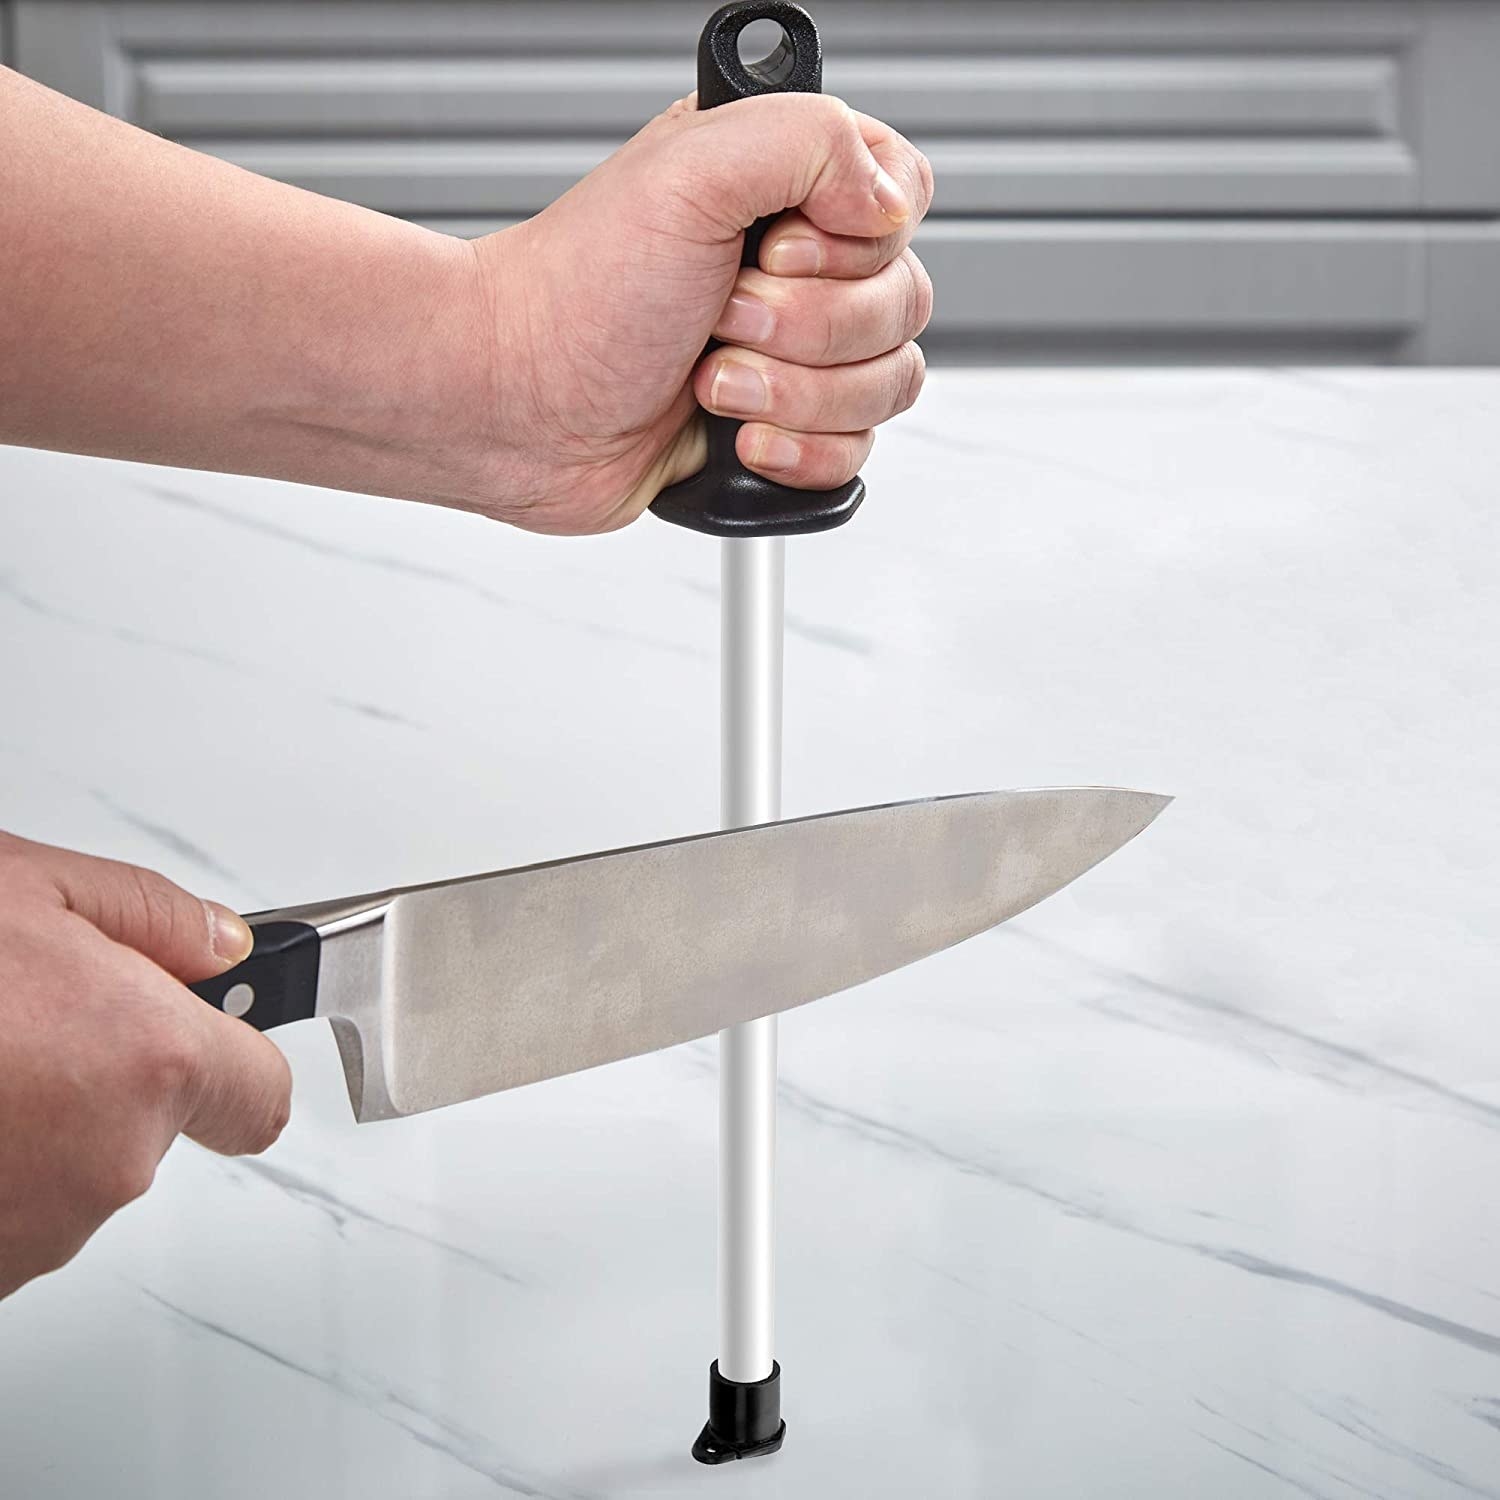 A person sharpens a knife against a rod